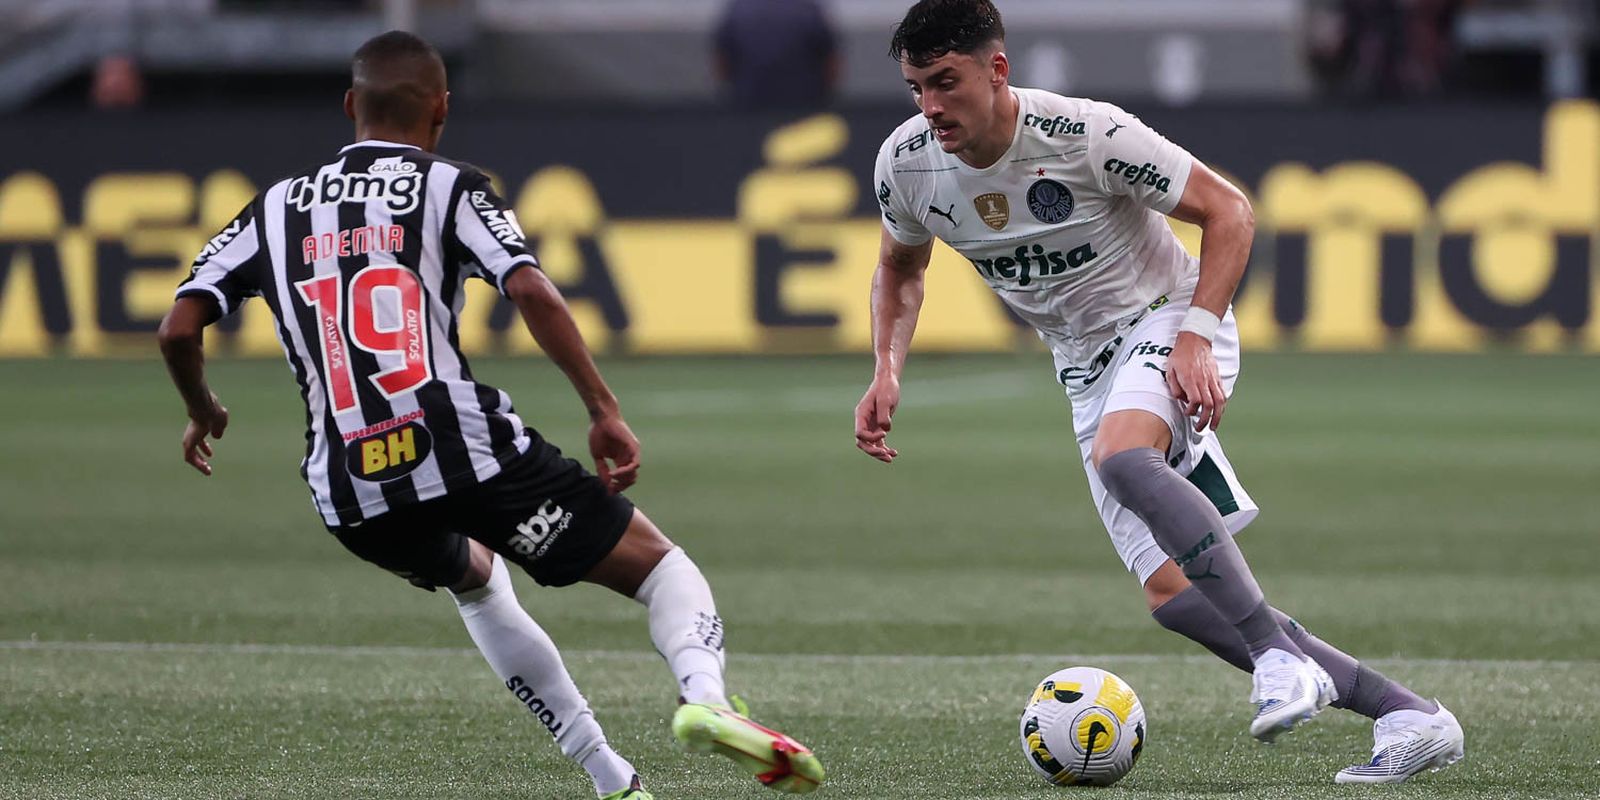 File:27 07 2019 Campeonato Brasileiro Jogo do Palmeiras x Vasco da